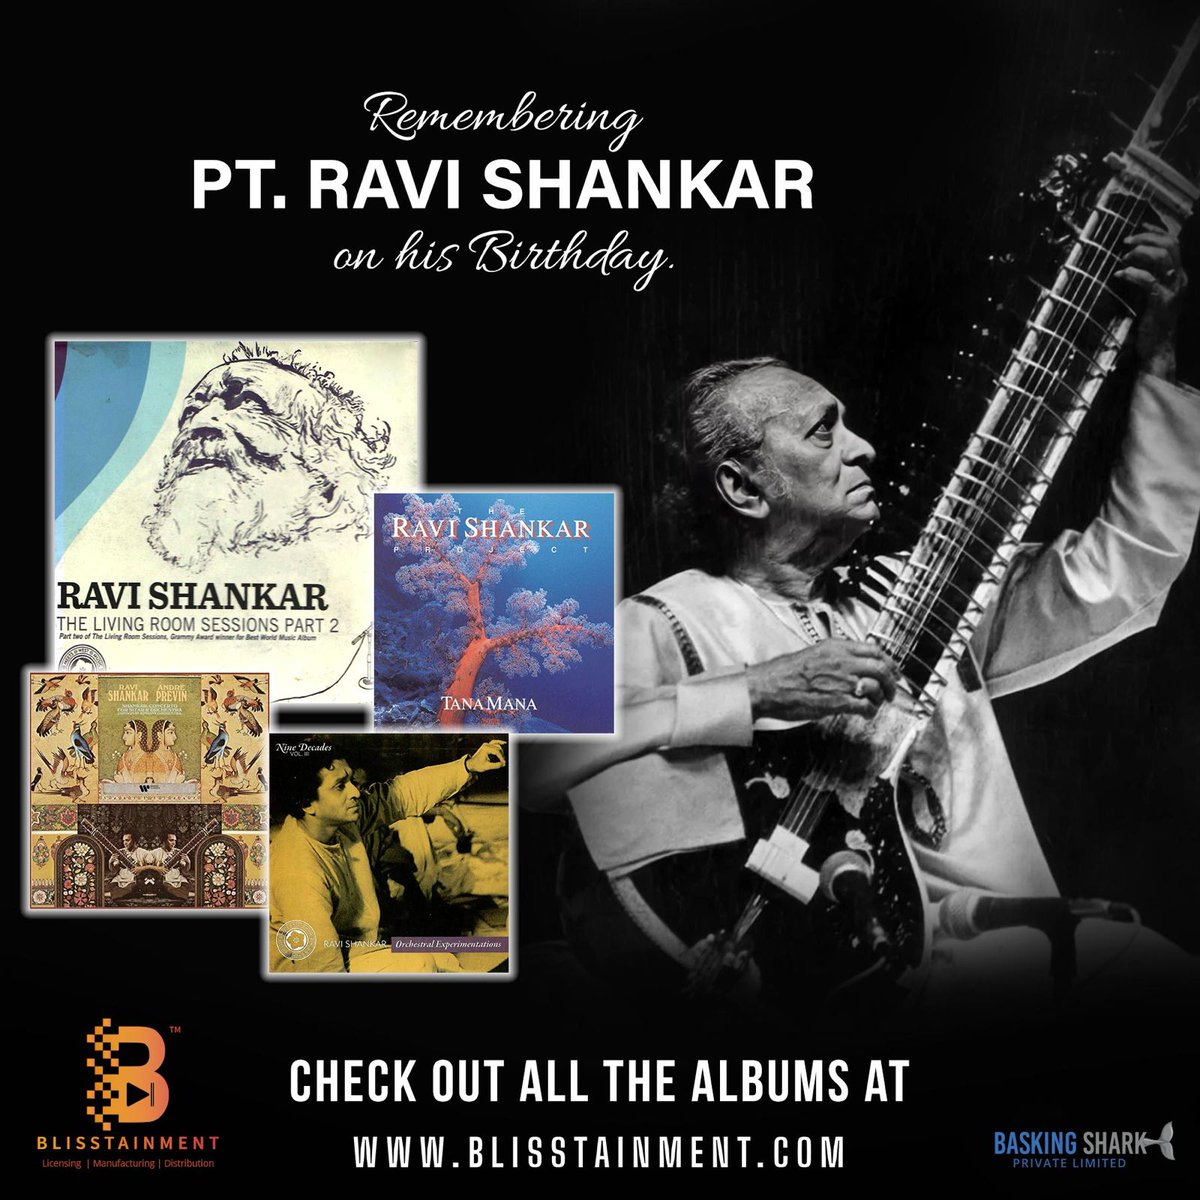 Honoring the sitar maestro, Pandit Ravi Shankar, on his birth anniversary.
#PanditRaviShankar #SitarMaestro #BirthAnniversary #IndianMusicLegend #RaviShankarTribute